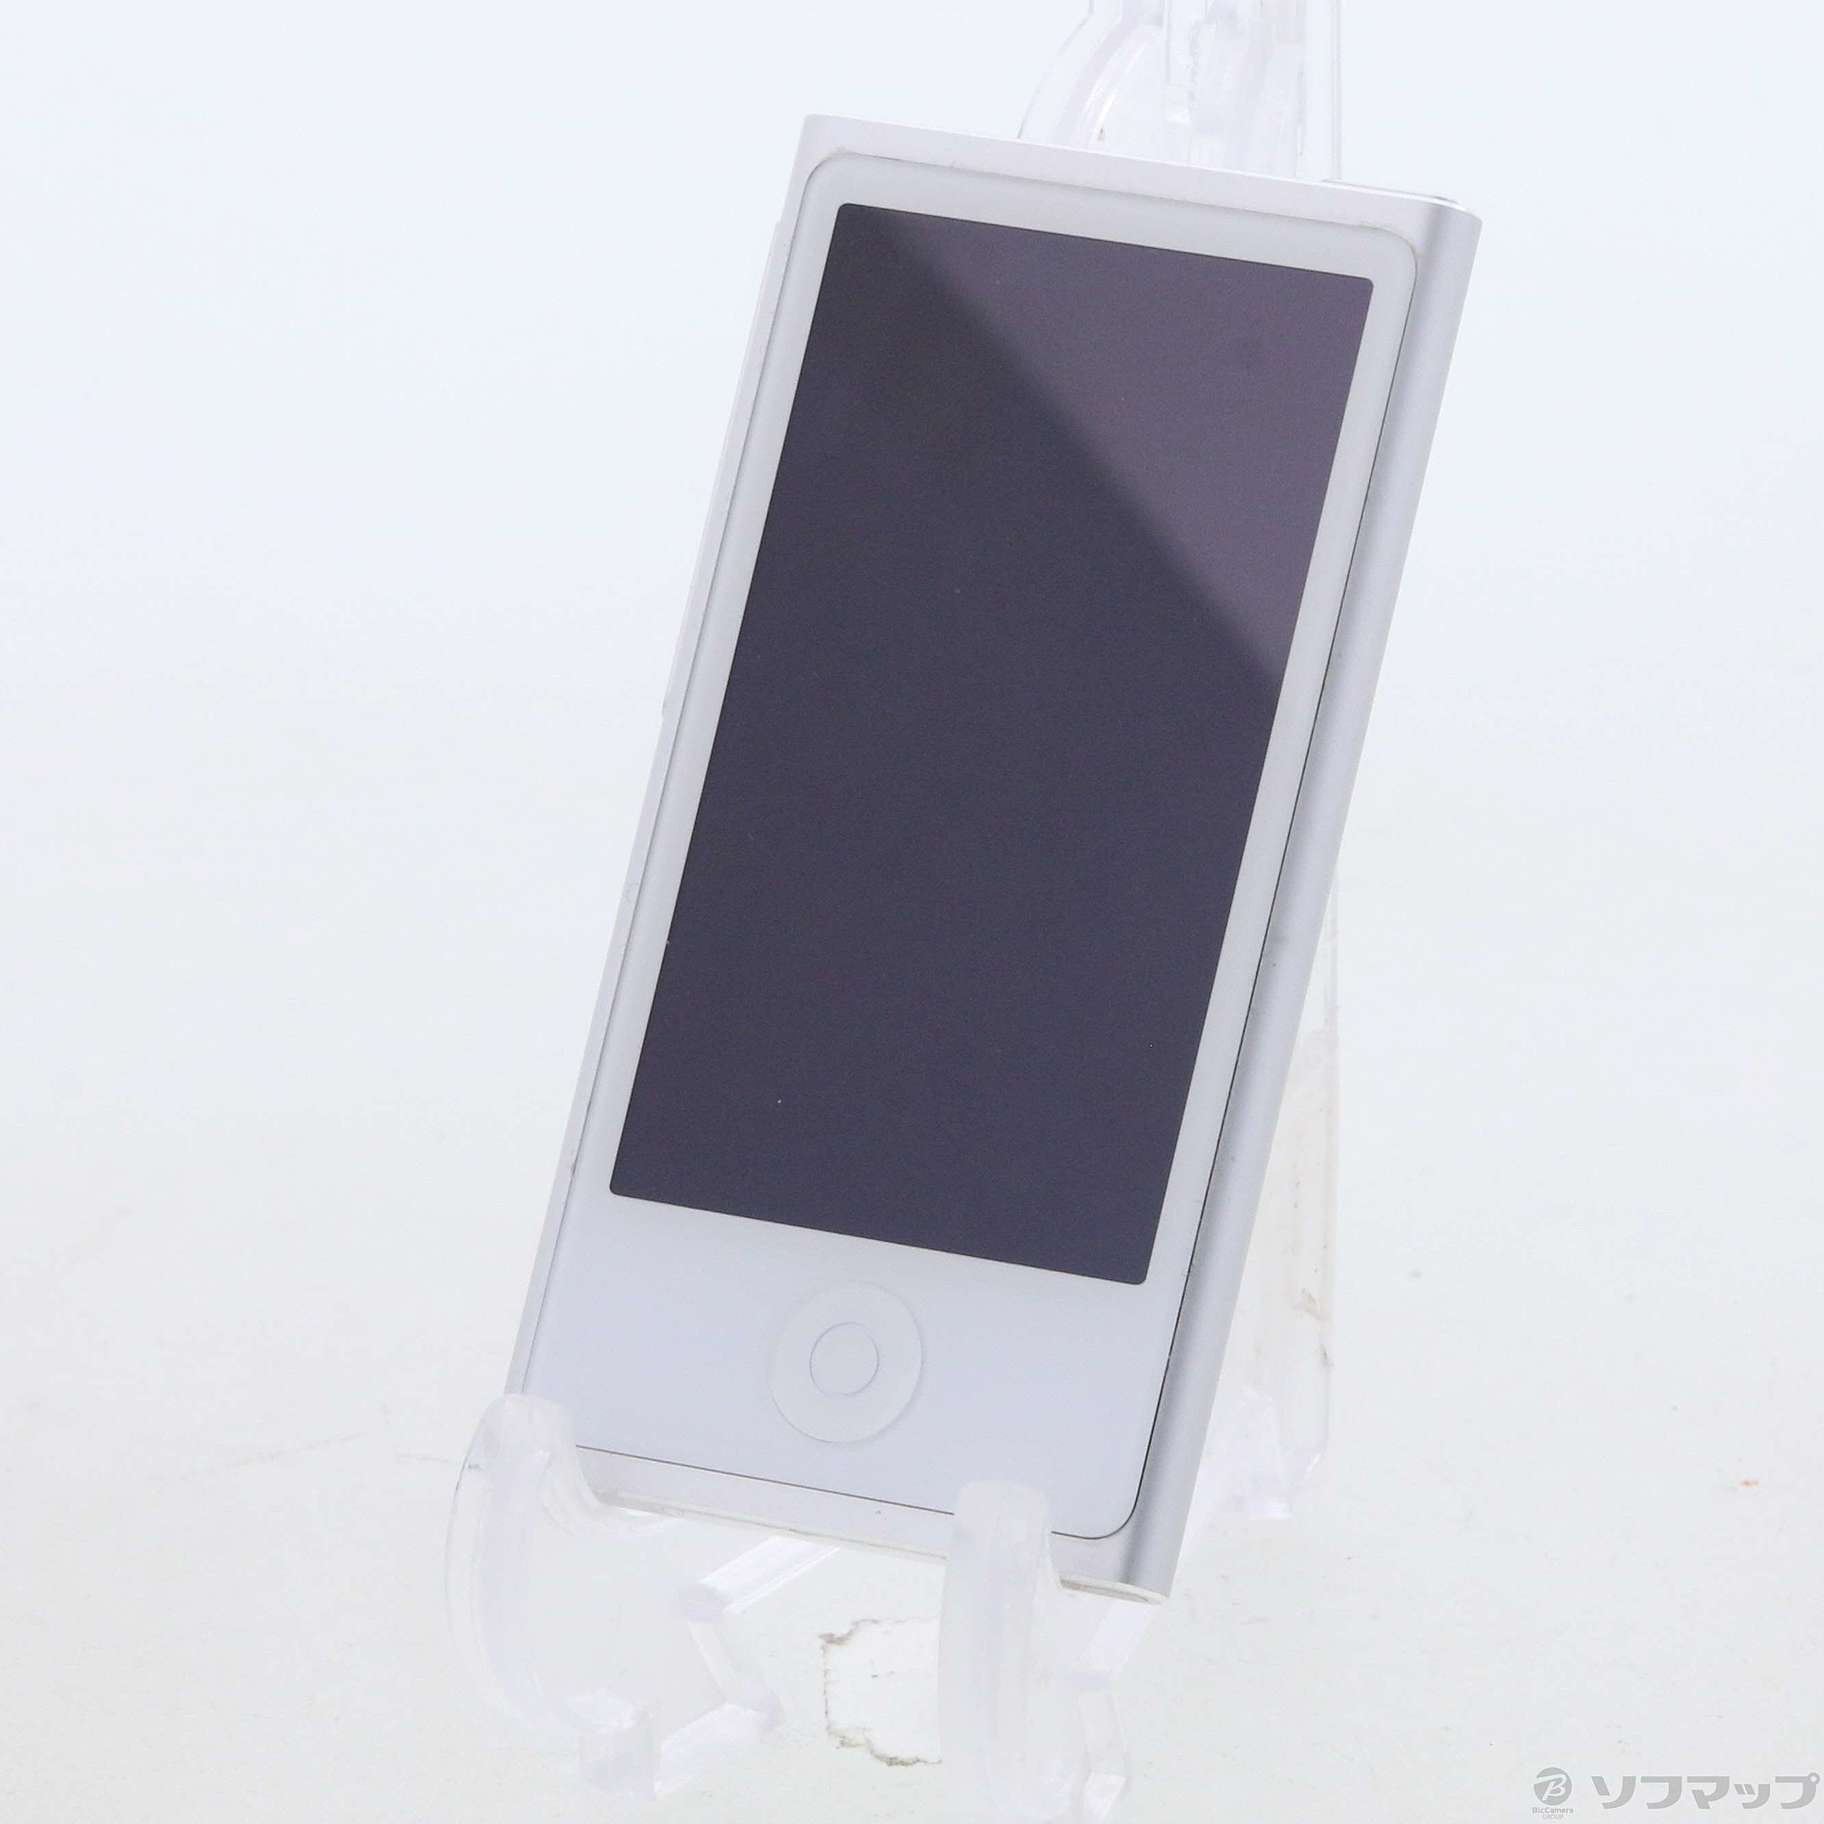 iPod nano 第7世代 シルバー